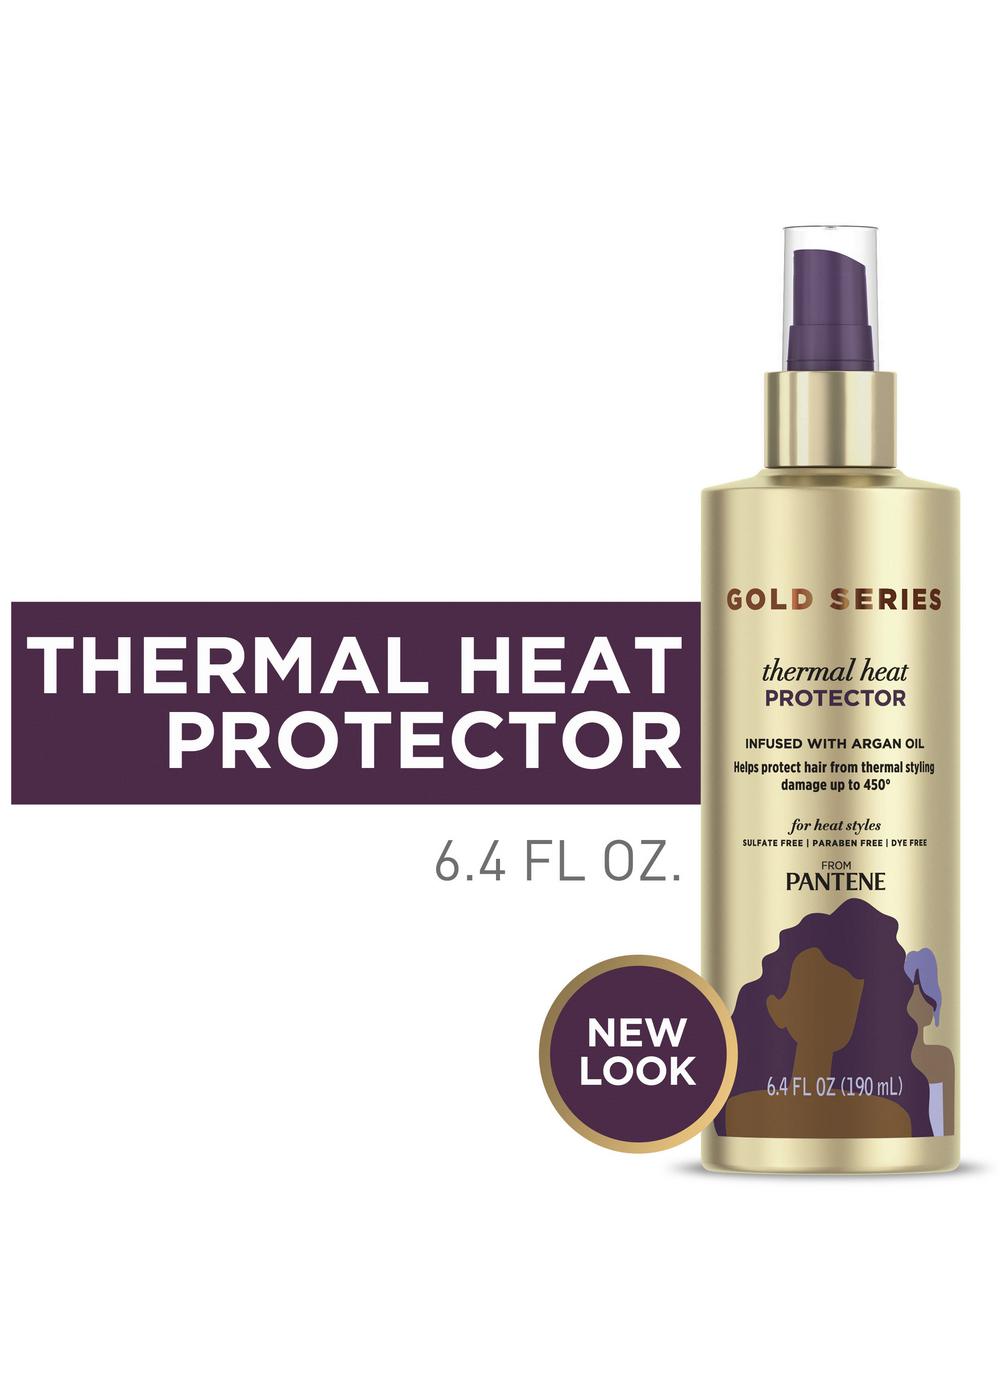 Pantene Gold Series Thermal Heat Protector; image 8 of 8